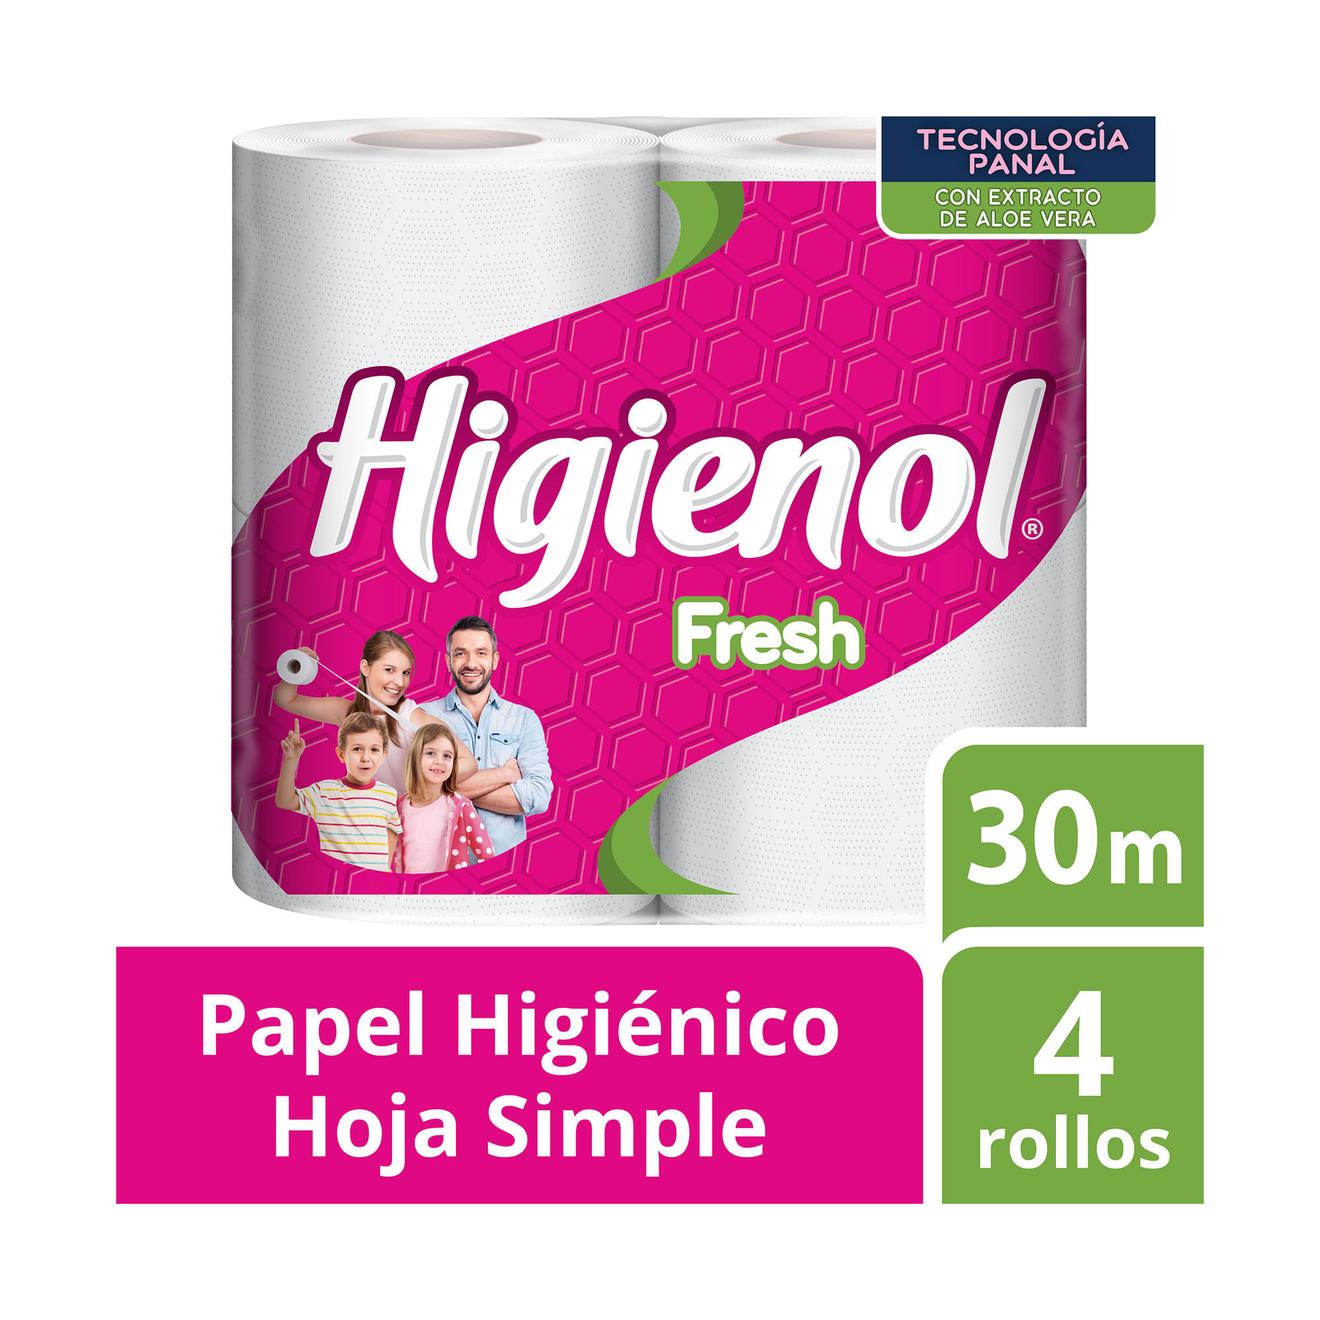 Oferta de Papel higiénico Higienol hoja simple fresh aloe x4 30 mts. por $1110 en Carrefour